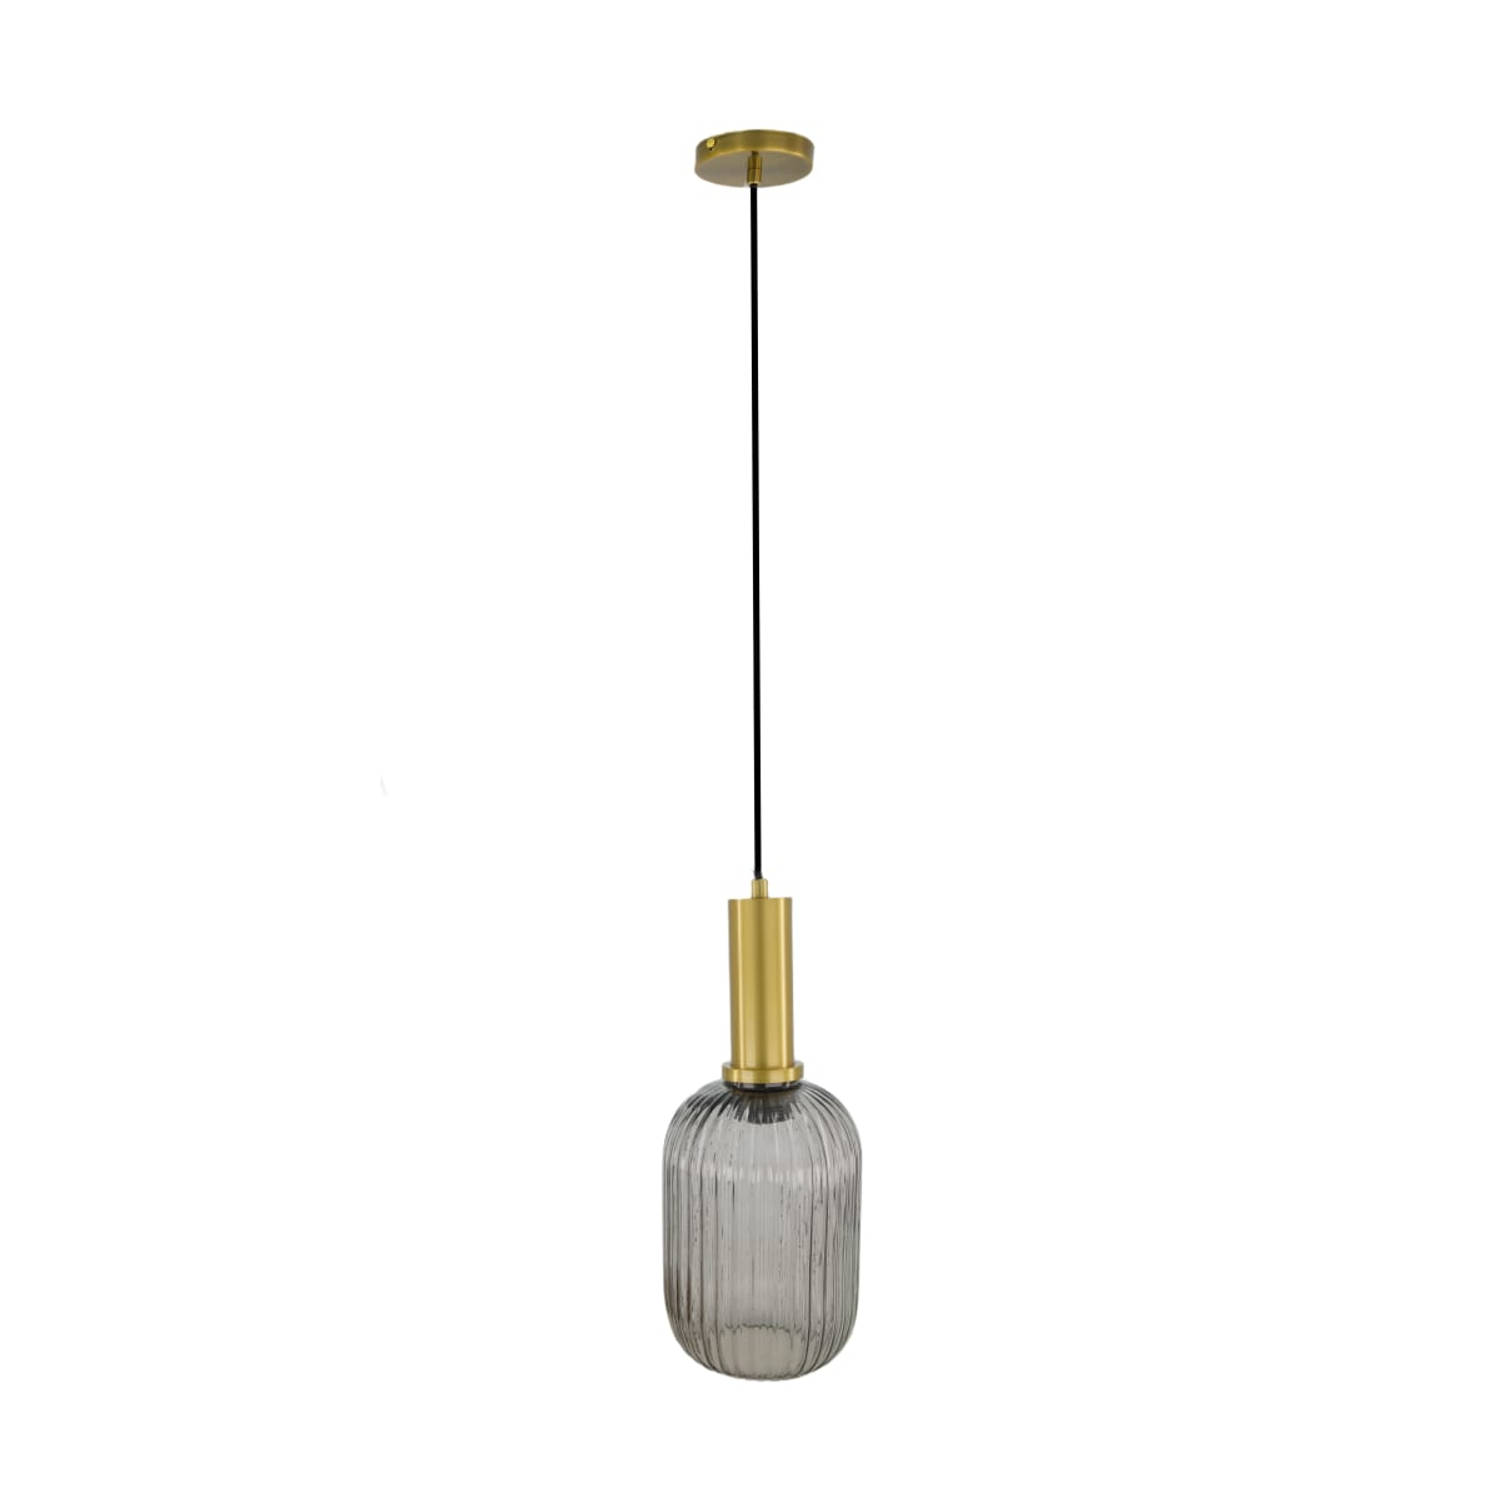 DKNC - Hanglamp glas - 14x14x32cm - Grijs